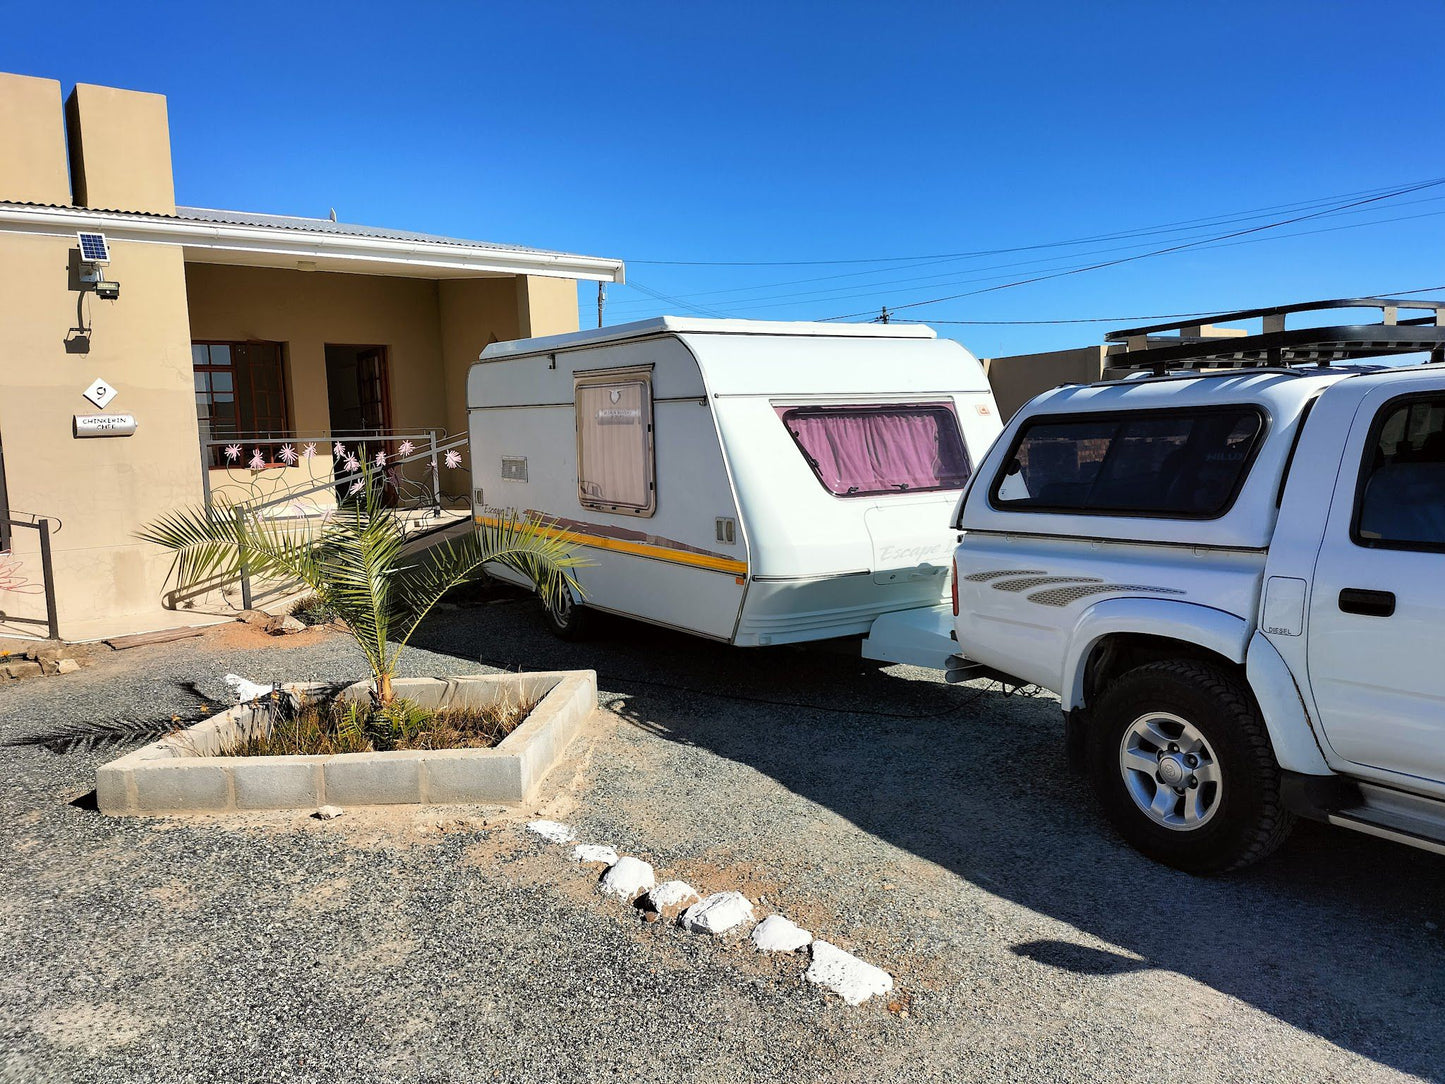 Kroon Lodge Kamieskroon Northern Cape South Africa 